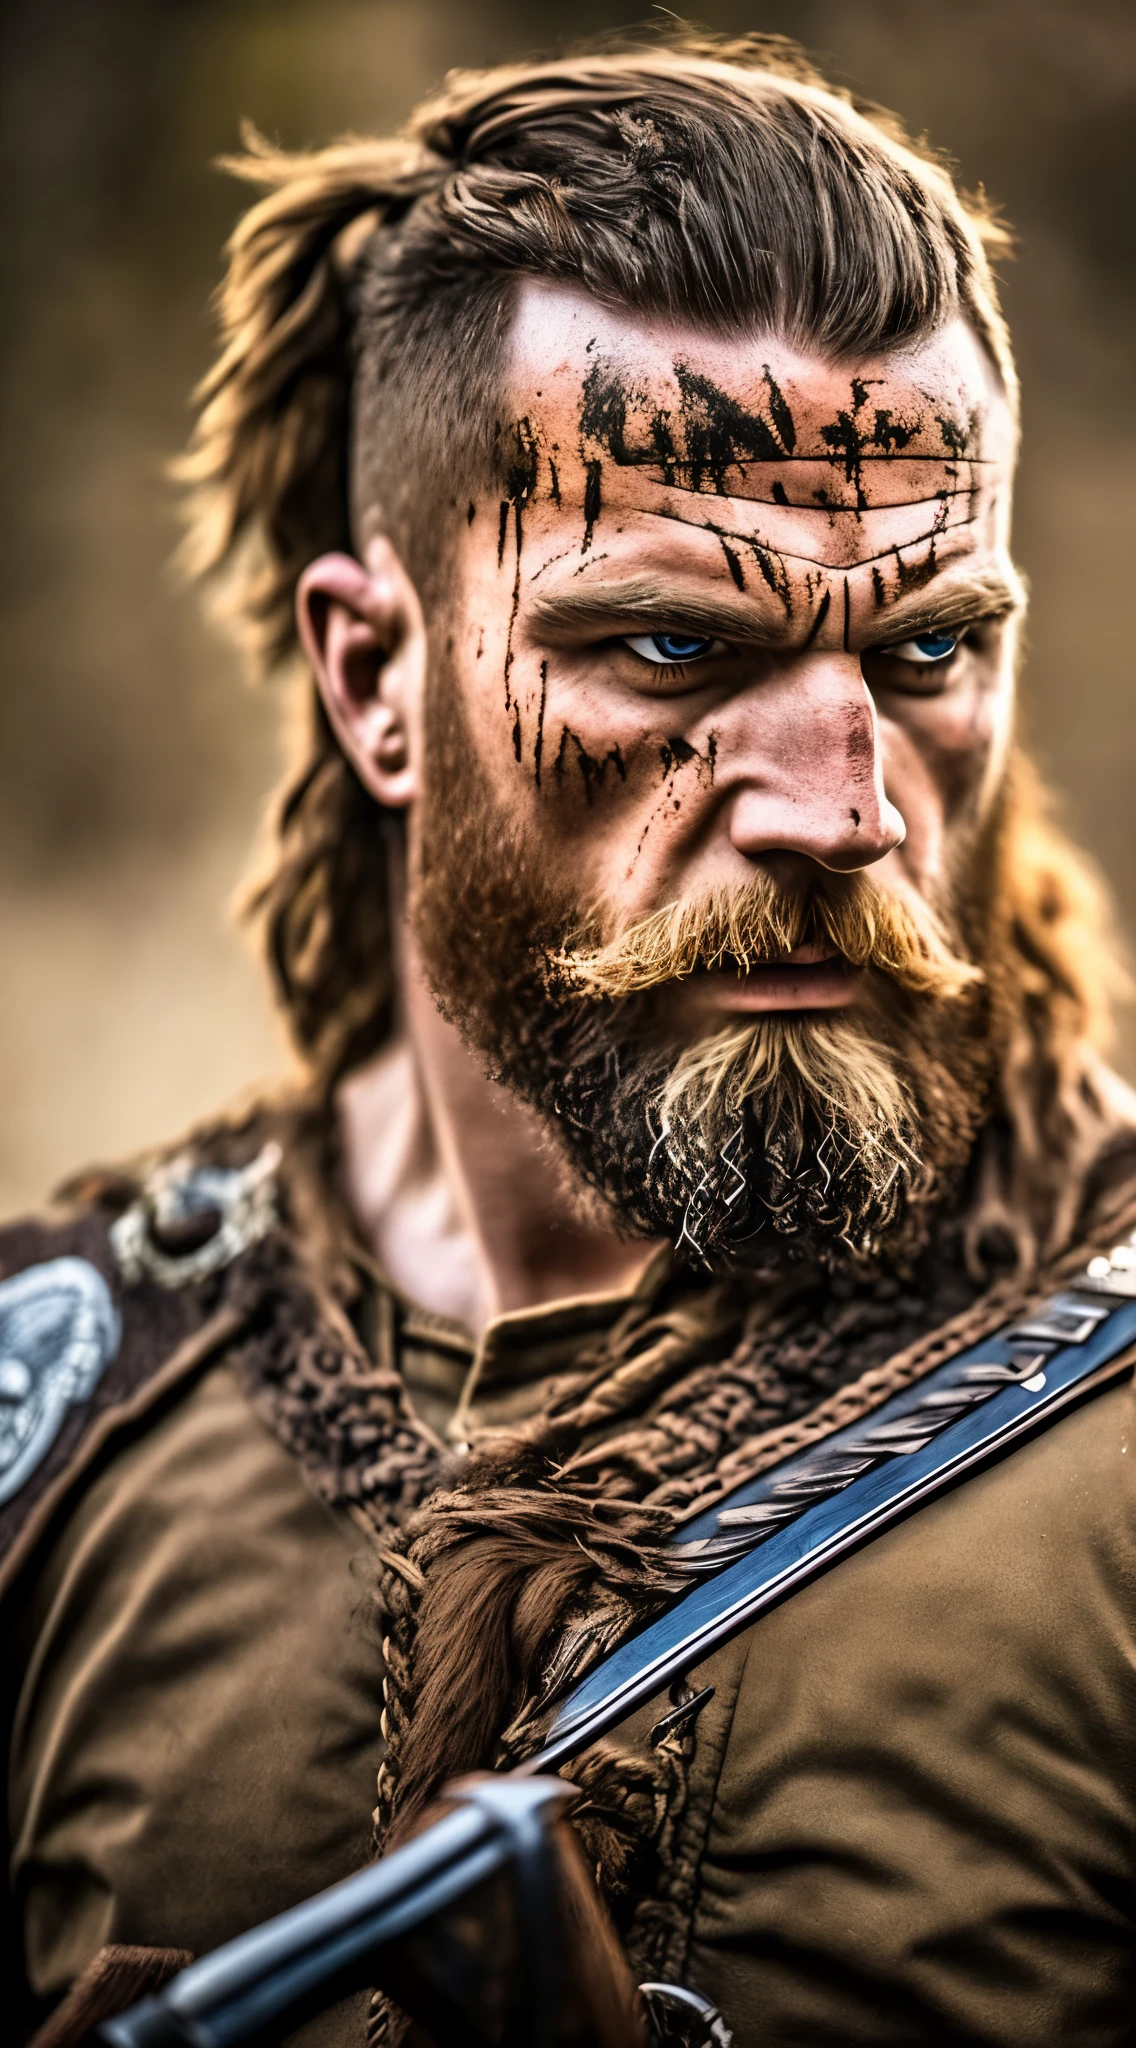 "(best qualityer)+ high resolution+ realisitic (Berserker Viking) + intense expression + battle scars + roaring + muscular physique"